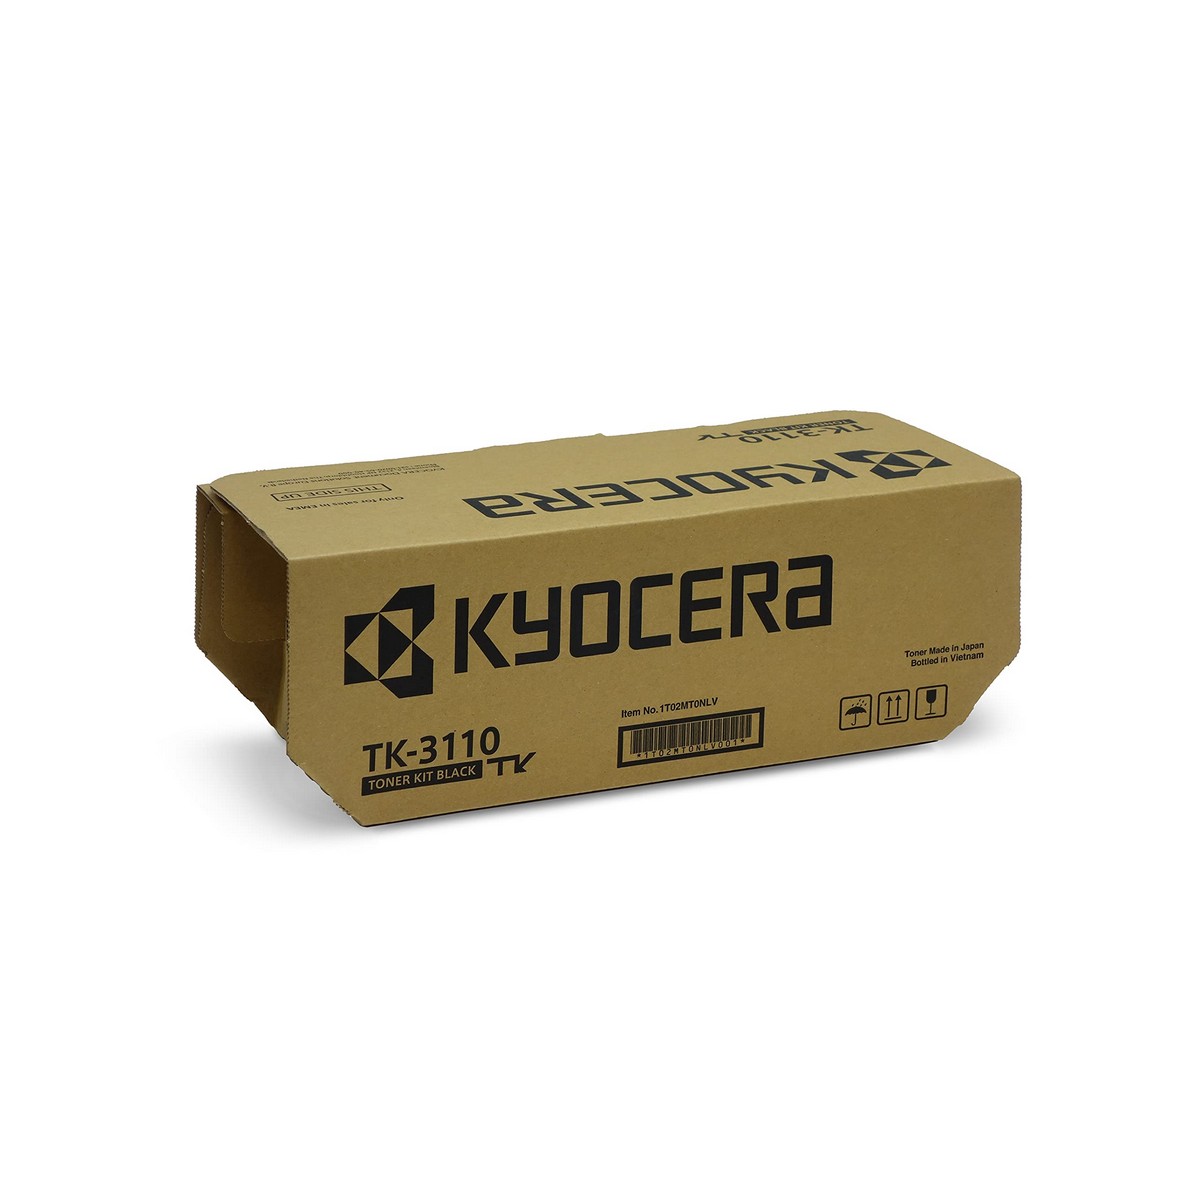 Kyocera Toner TK-3110